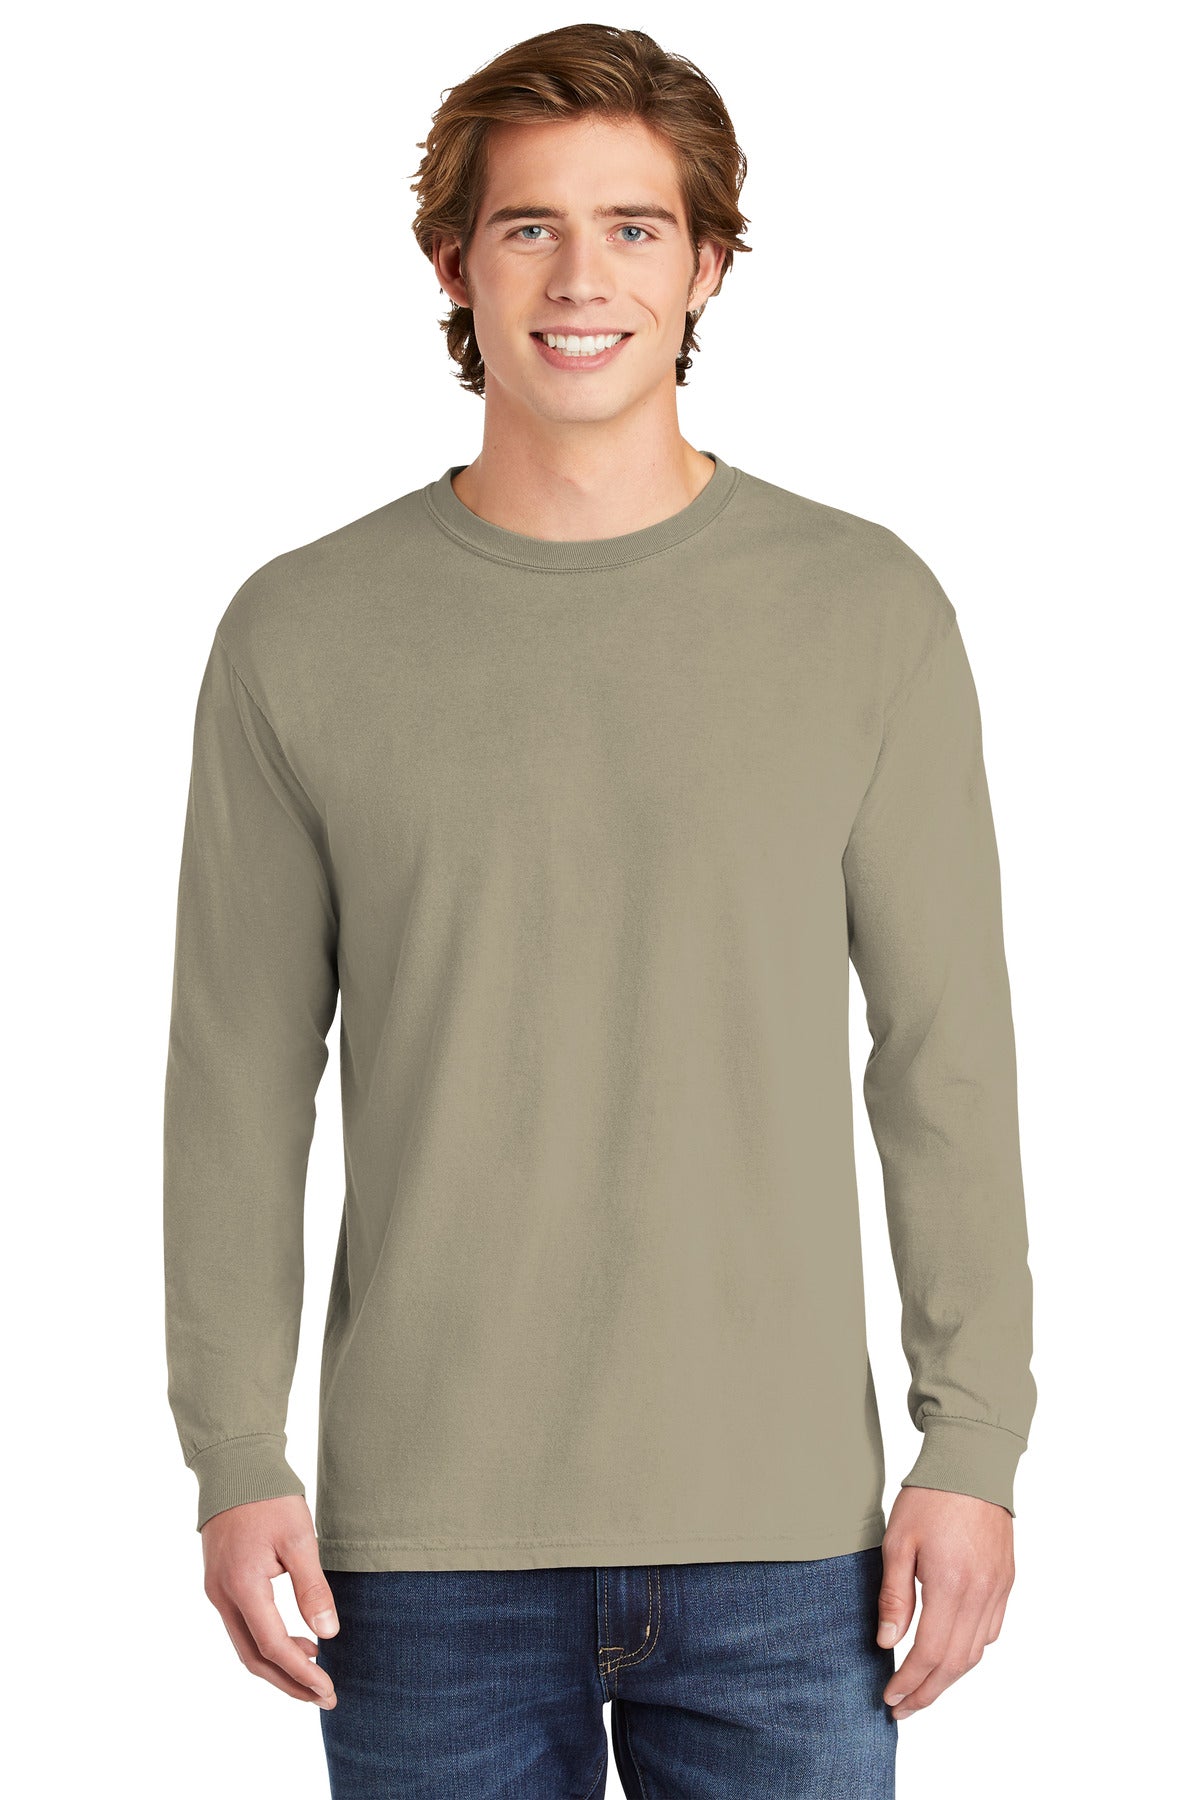 T-Shirts Sandstone Comfort Colors